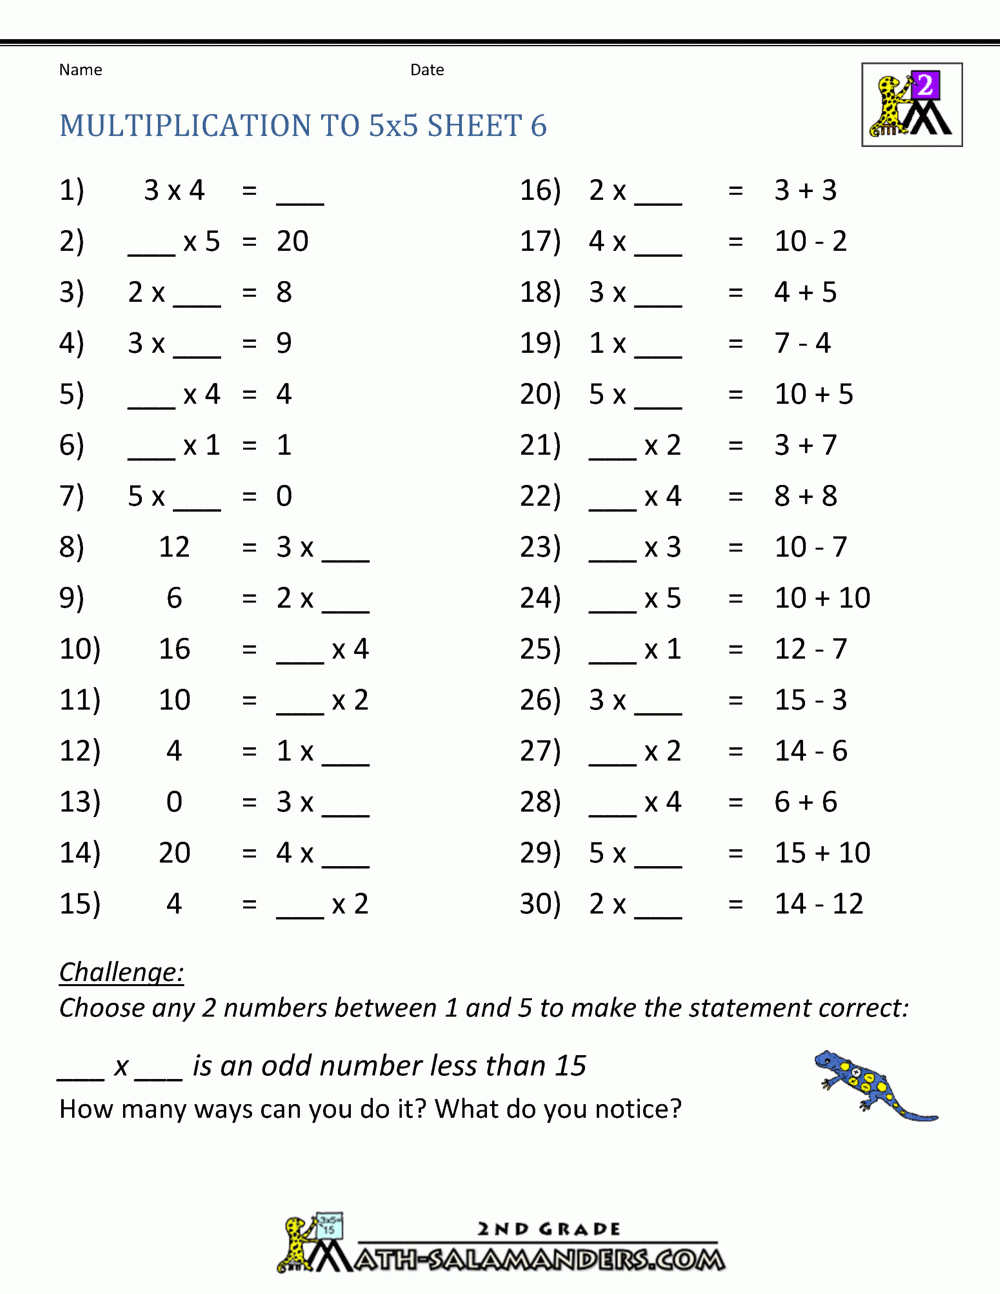 multiplication-1s-through-9s-basic-rocket-math